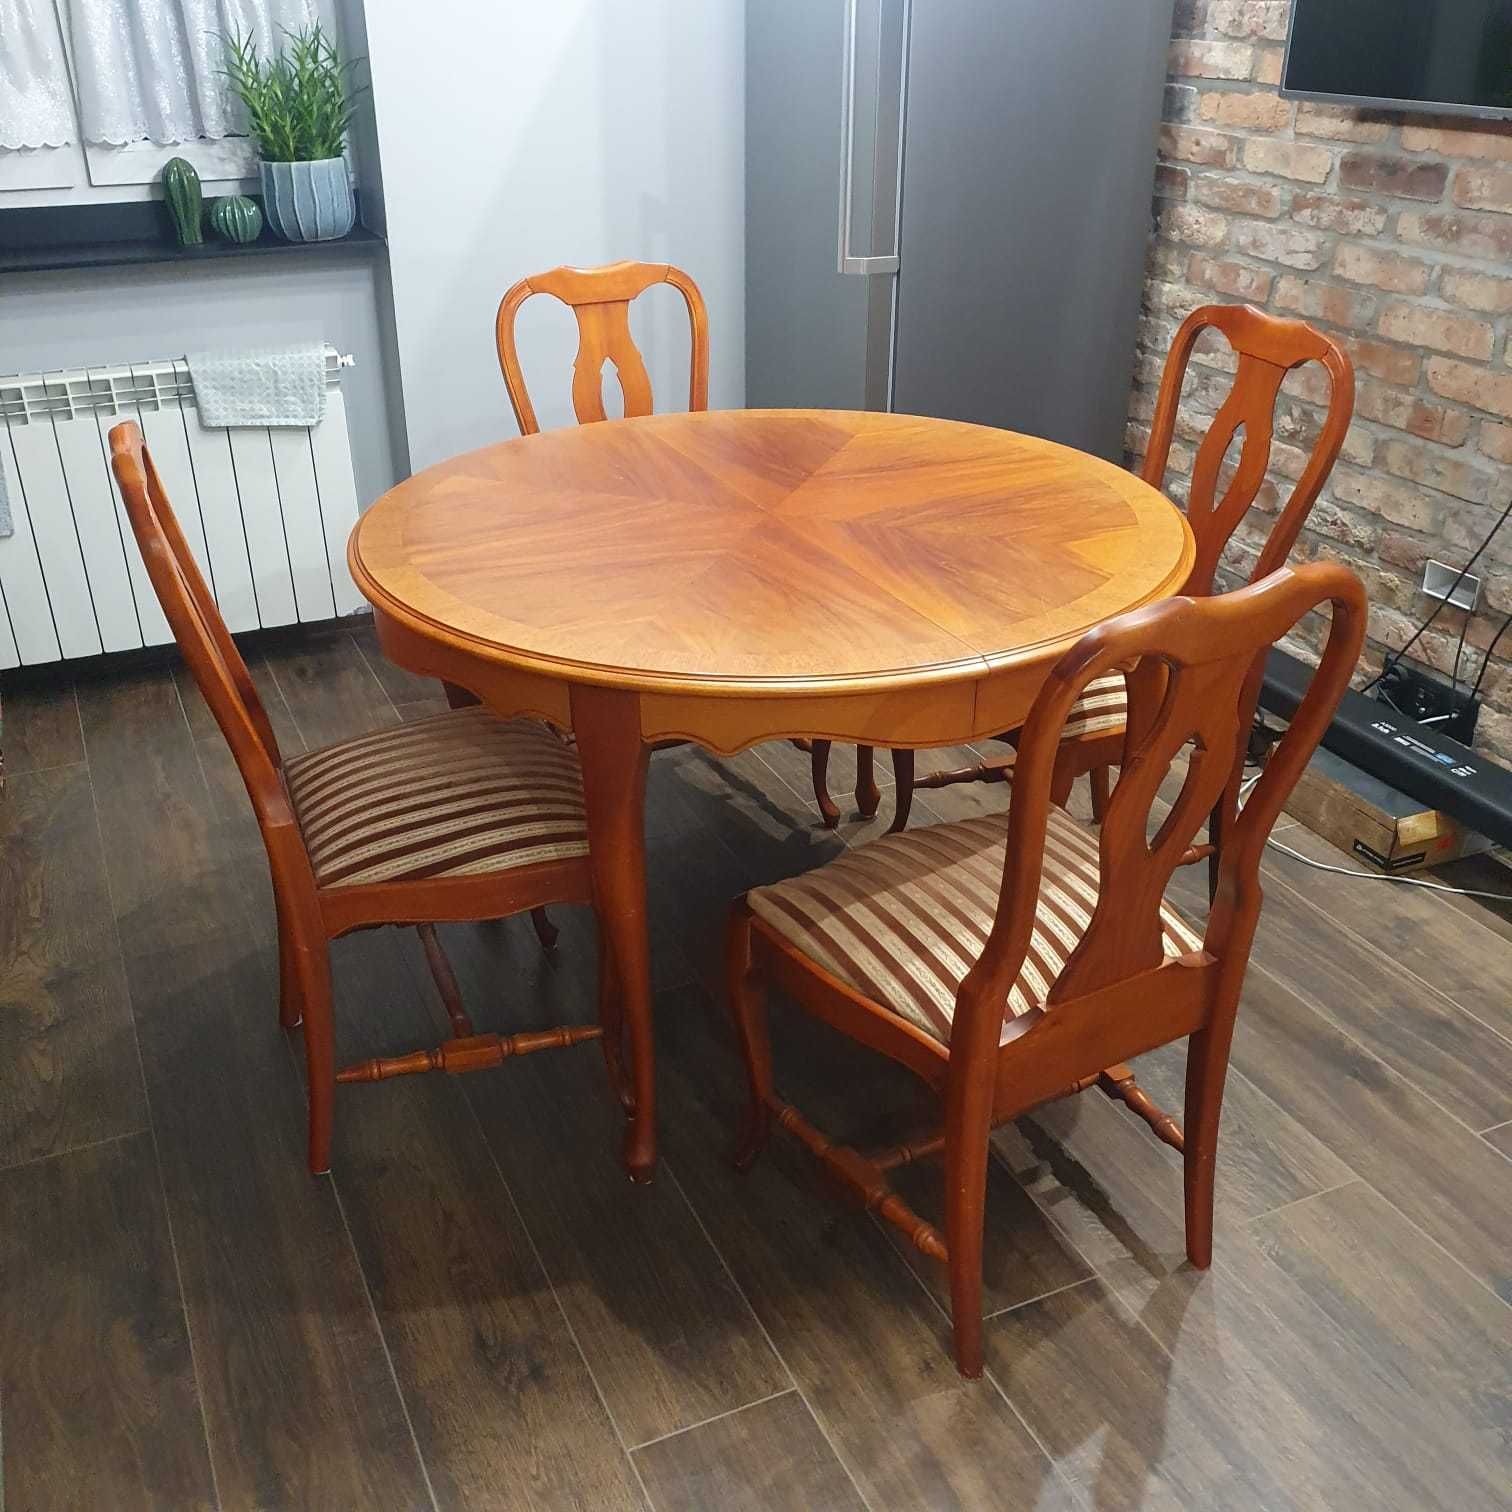 Stół + krzesła komplet